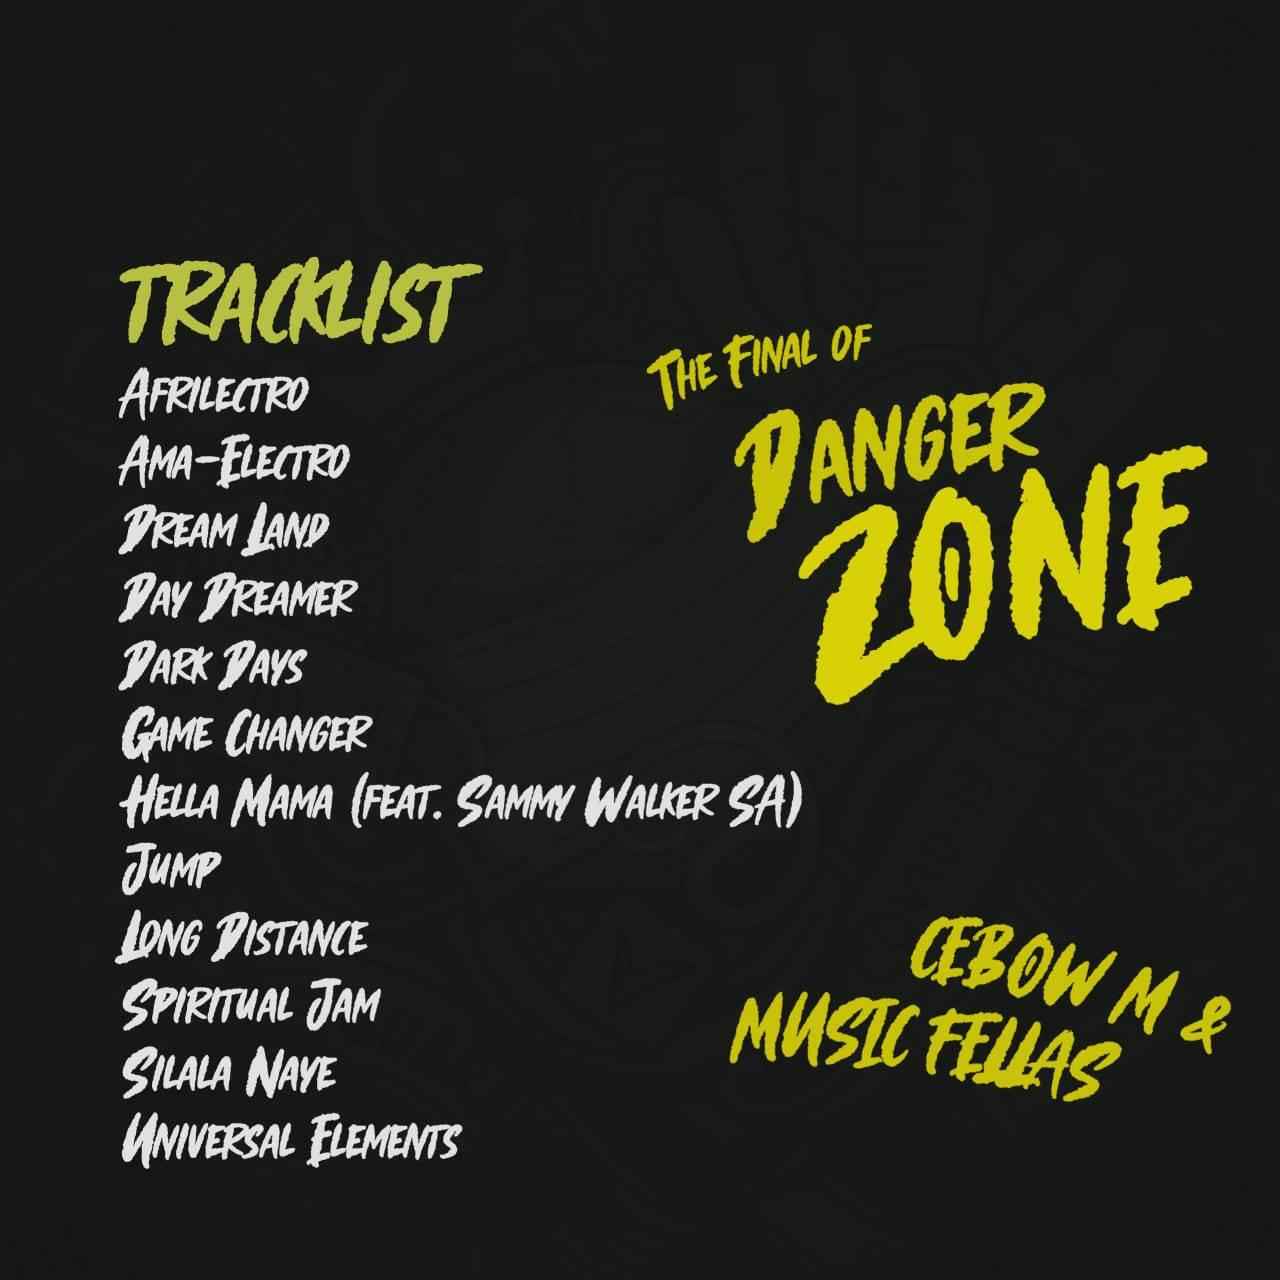 Music Fellas & Cebow M - The Final Of Danger Zone